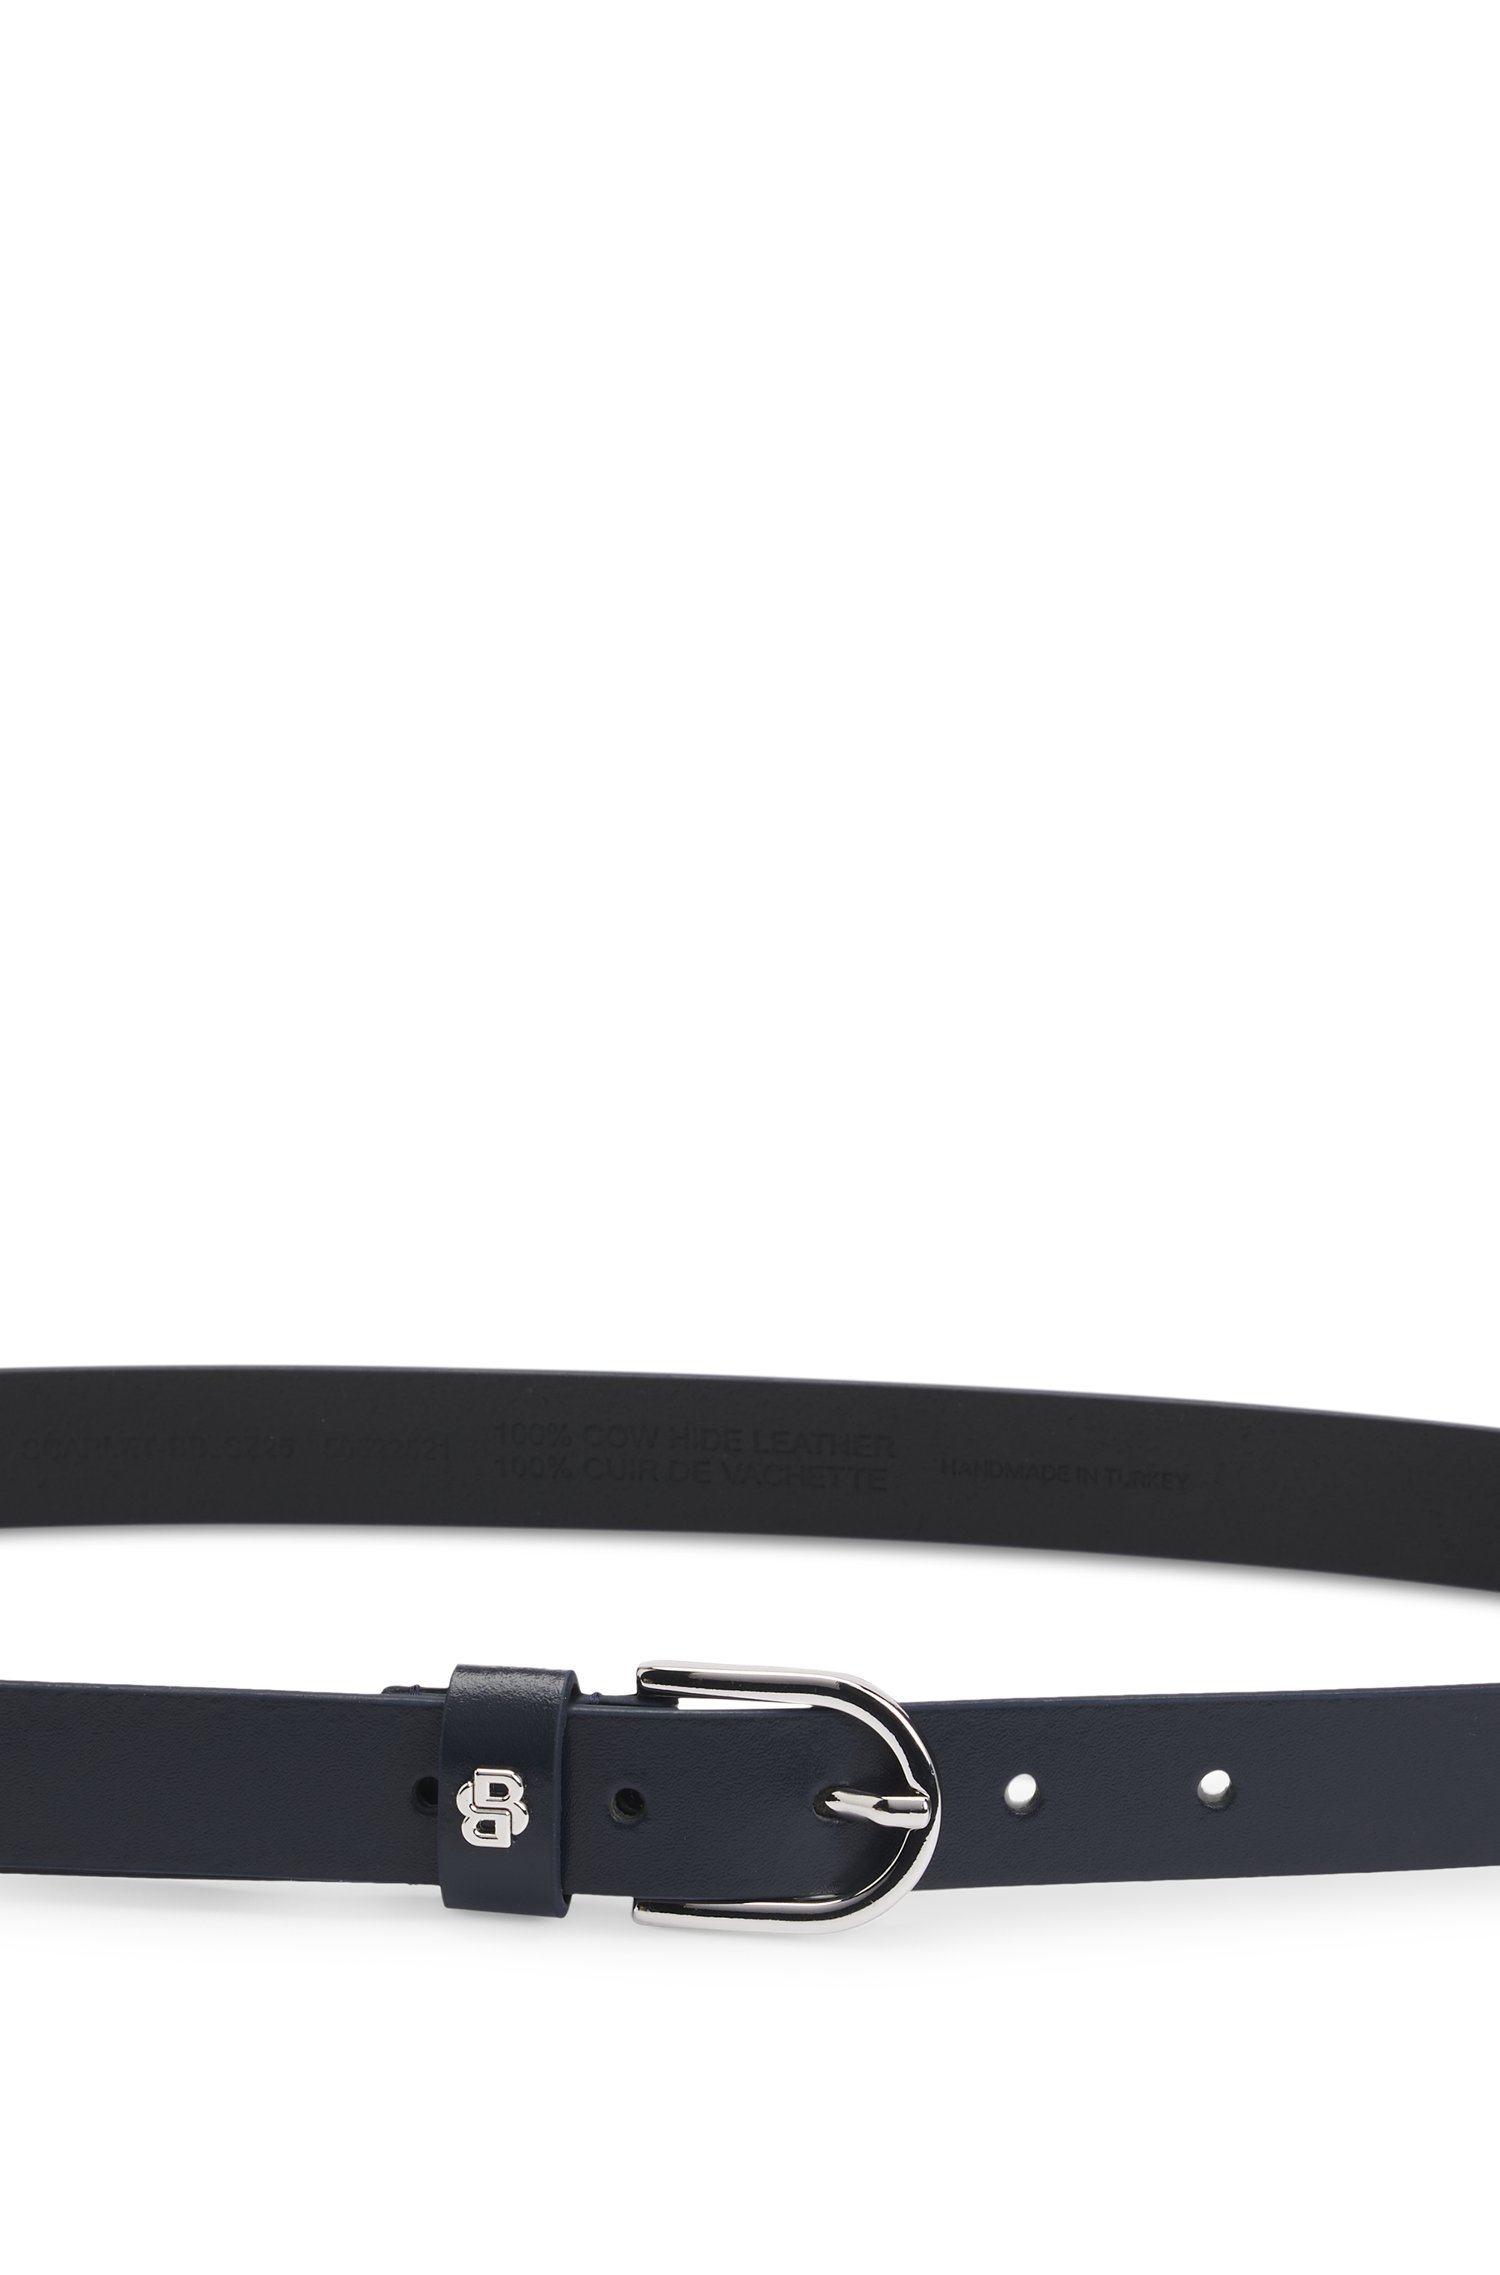 Italian-leather belt with Double B monogram